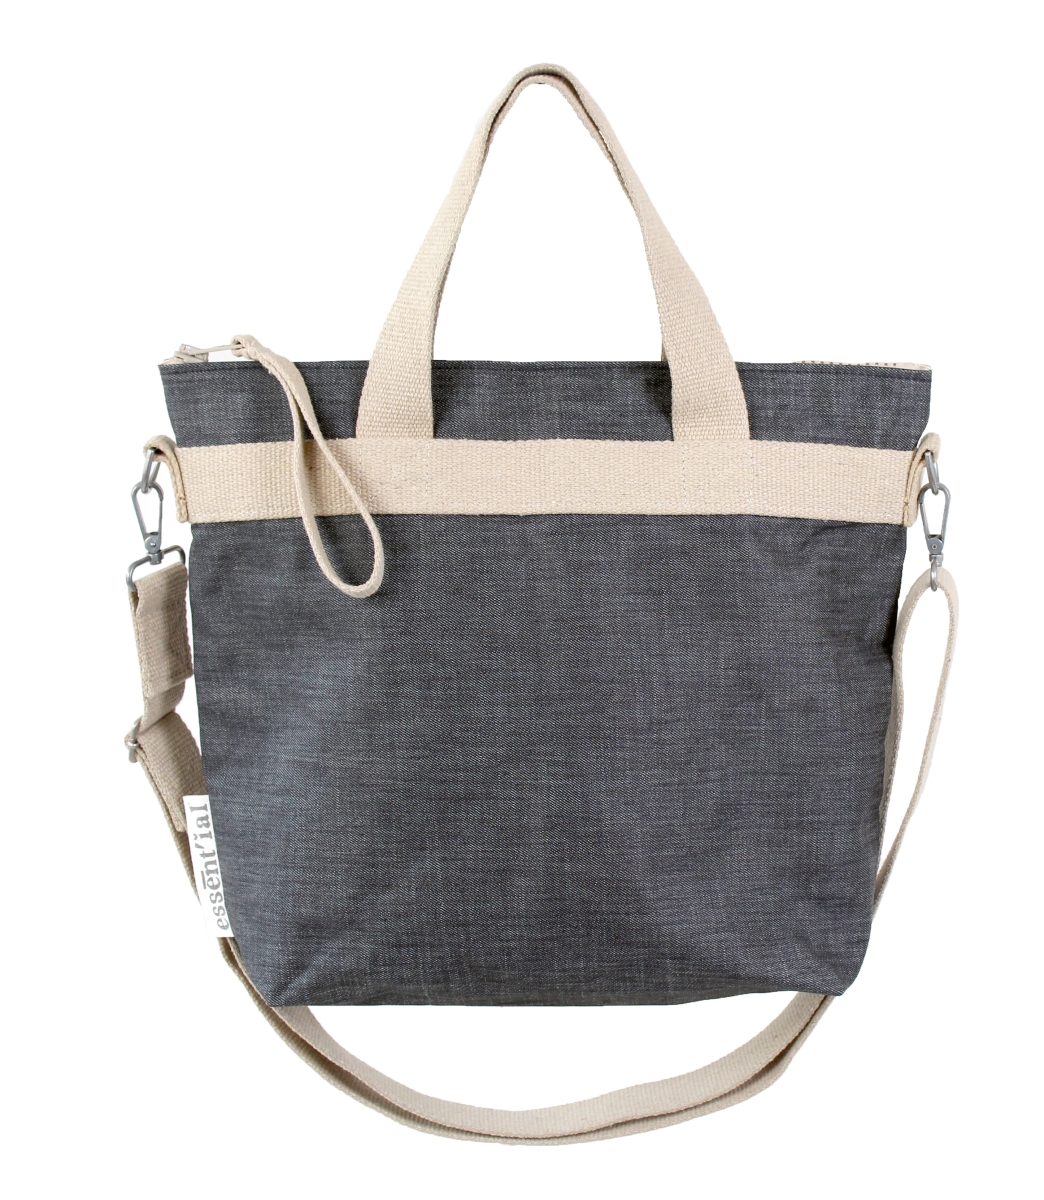 Essential Es002015 Shoulder Bag Denim Handbags, Extra Large